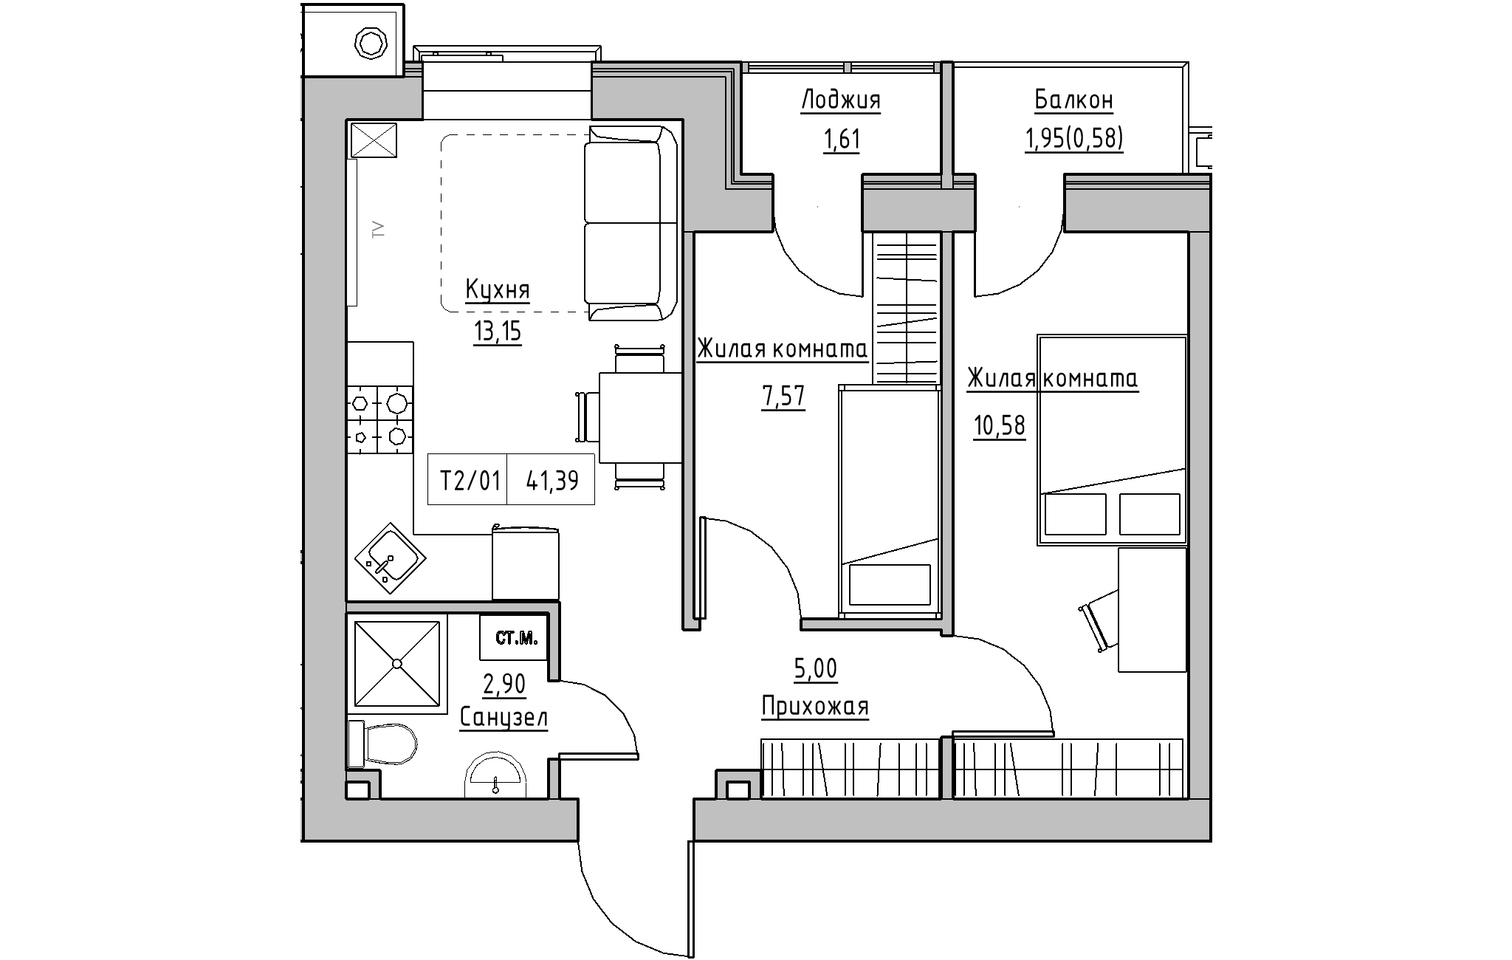 Planning 2-rm flats area 41.39m2, KS-013-02/0009.